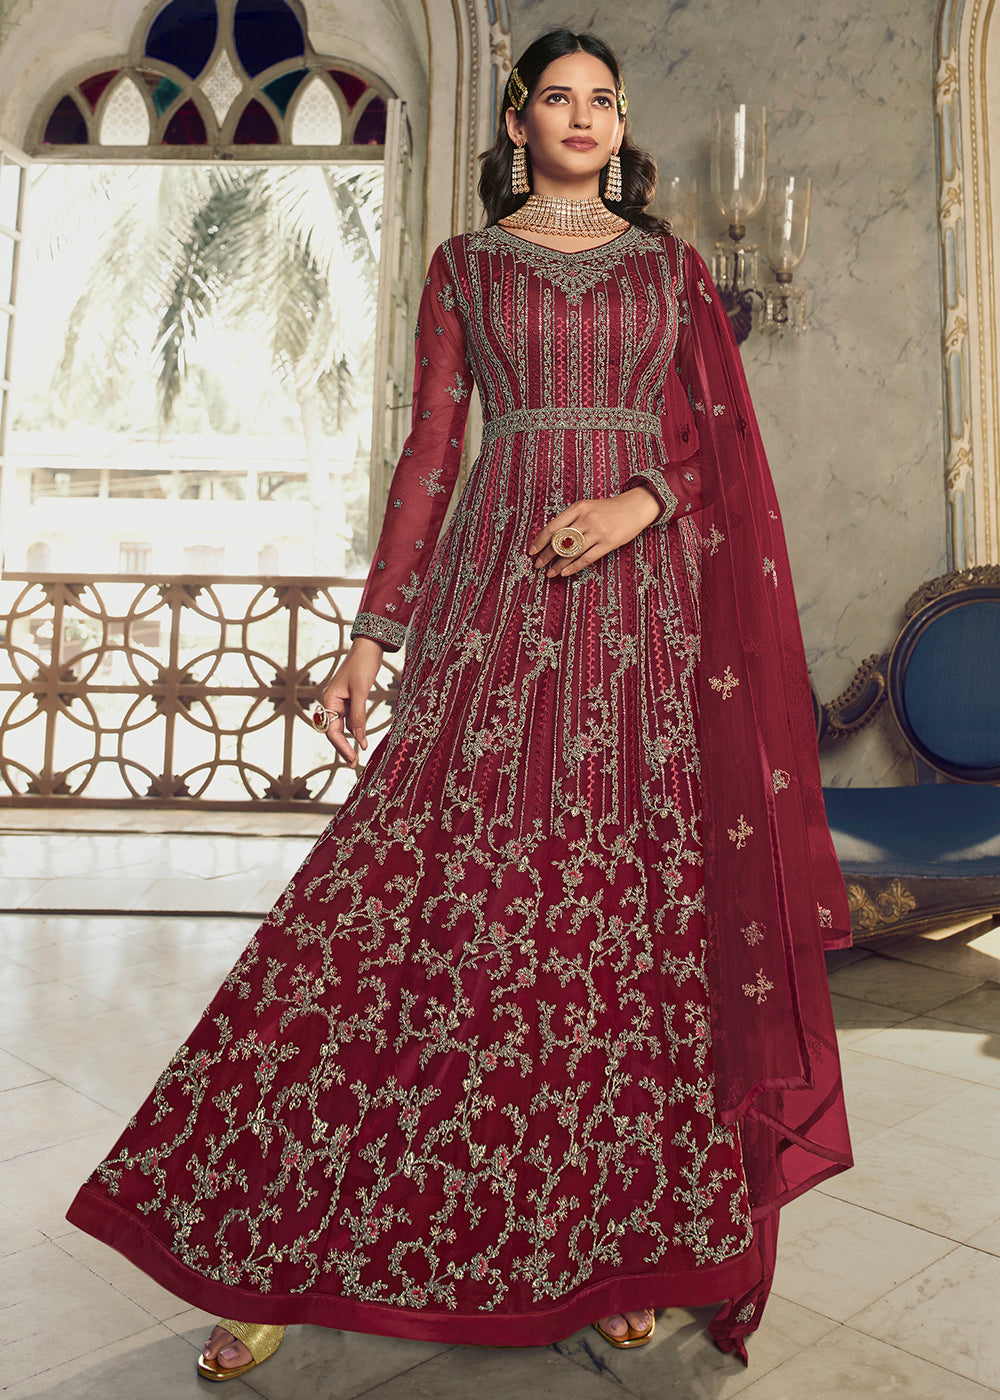 Buy Now Festive Maroon Wedding Party Net Designer Anarkali Suit Online in USA, UK, Australia, New Zealand, Canada & Worldwide at Empress Clothing.